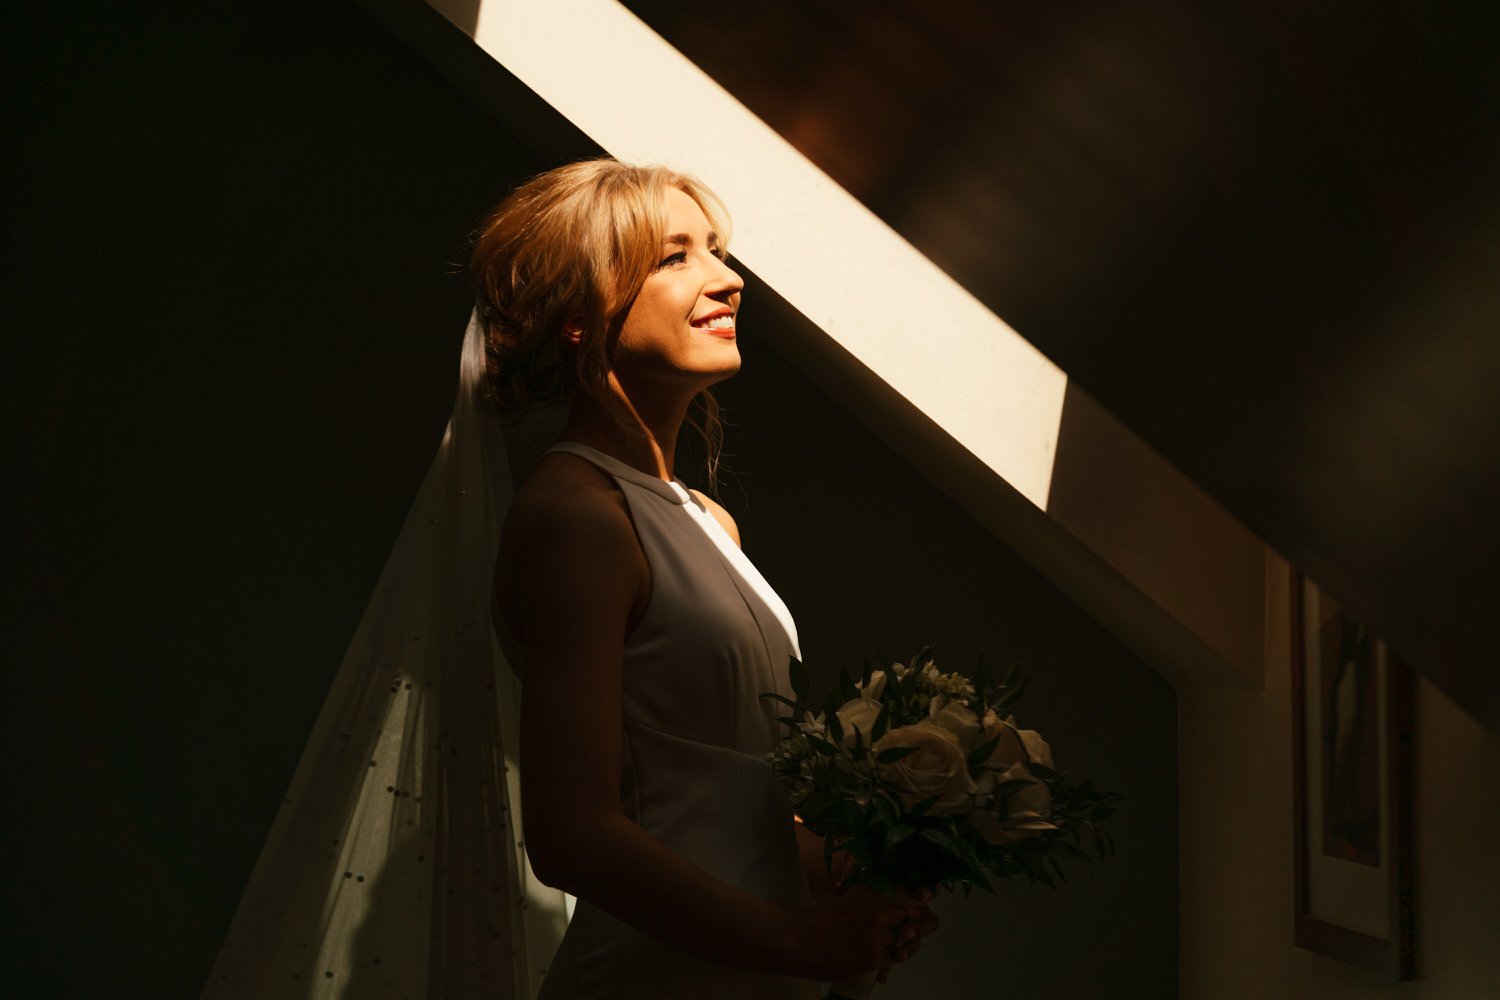 Bride in window